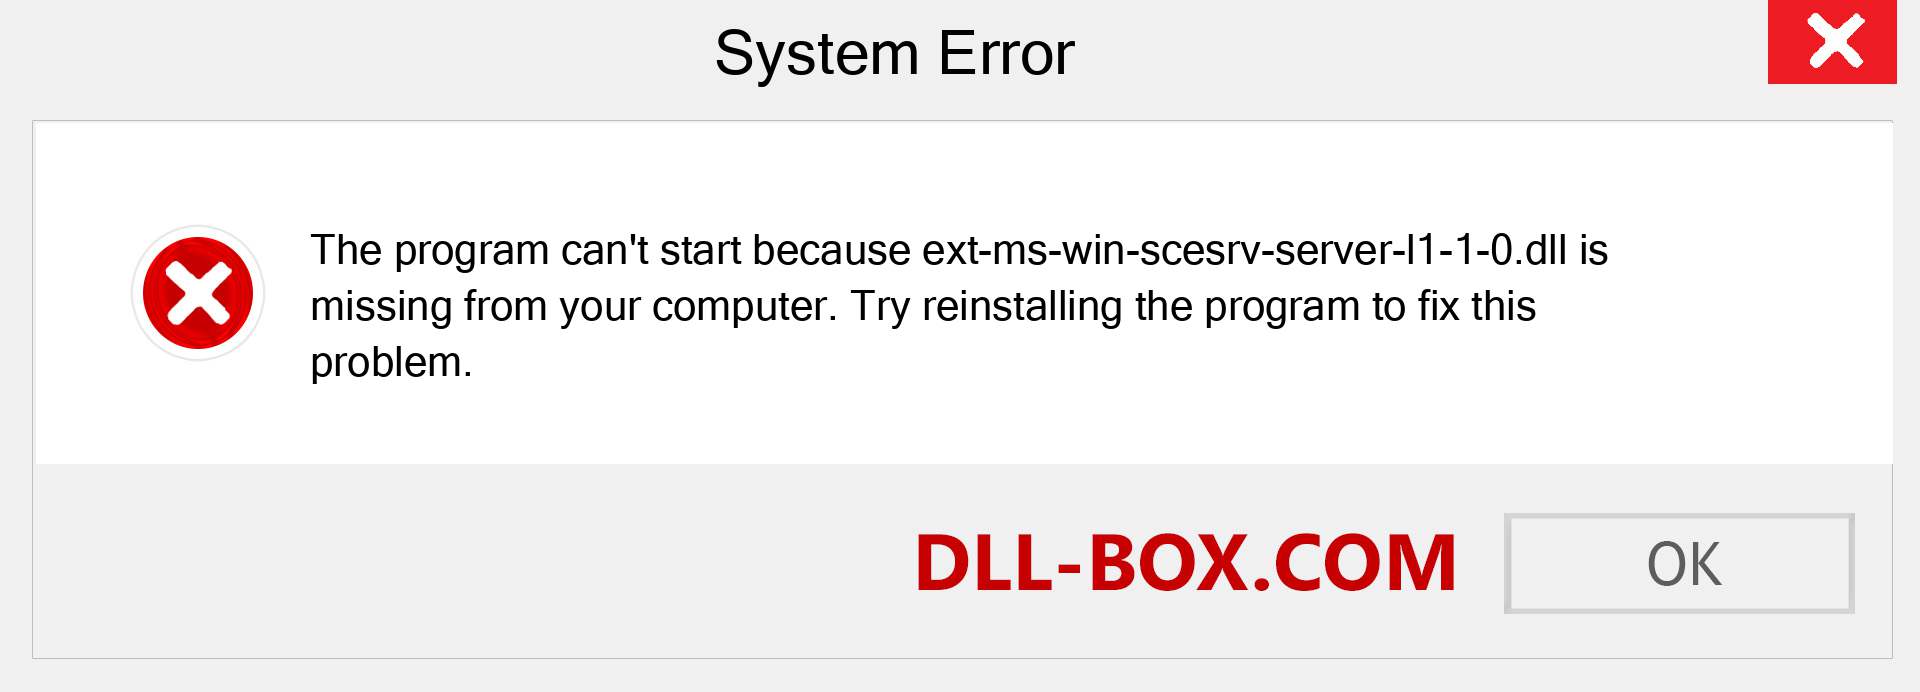  ext-ms-win-scesrv-server-l1-1-0.dll file is missing?. Download for Windows 7, 8, 10 - Fix  ext-ms-win-scesrv-server-l1-1-0 dll Missing Error on Windows, photos, images